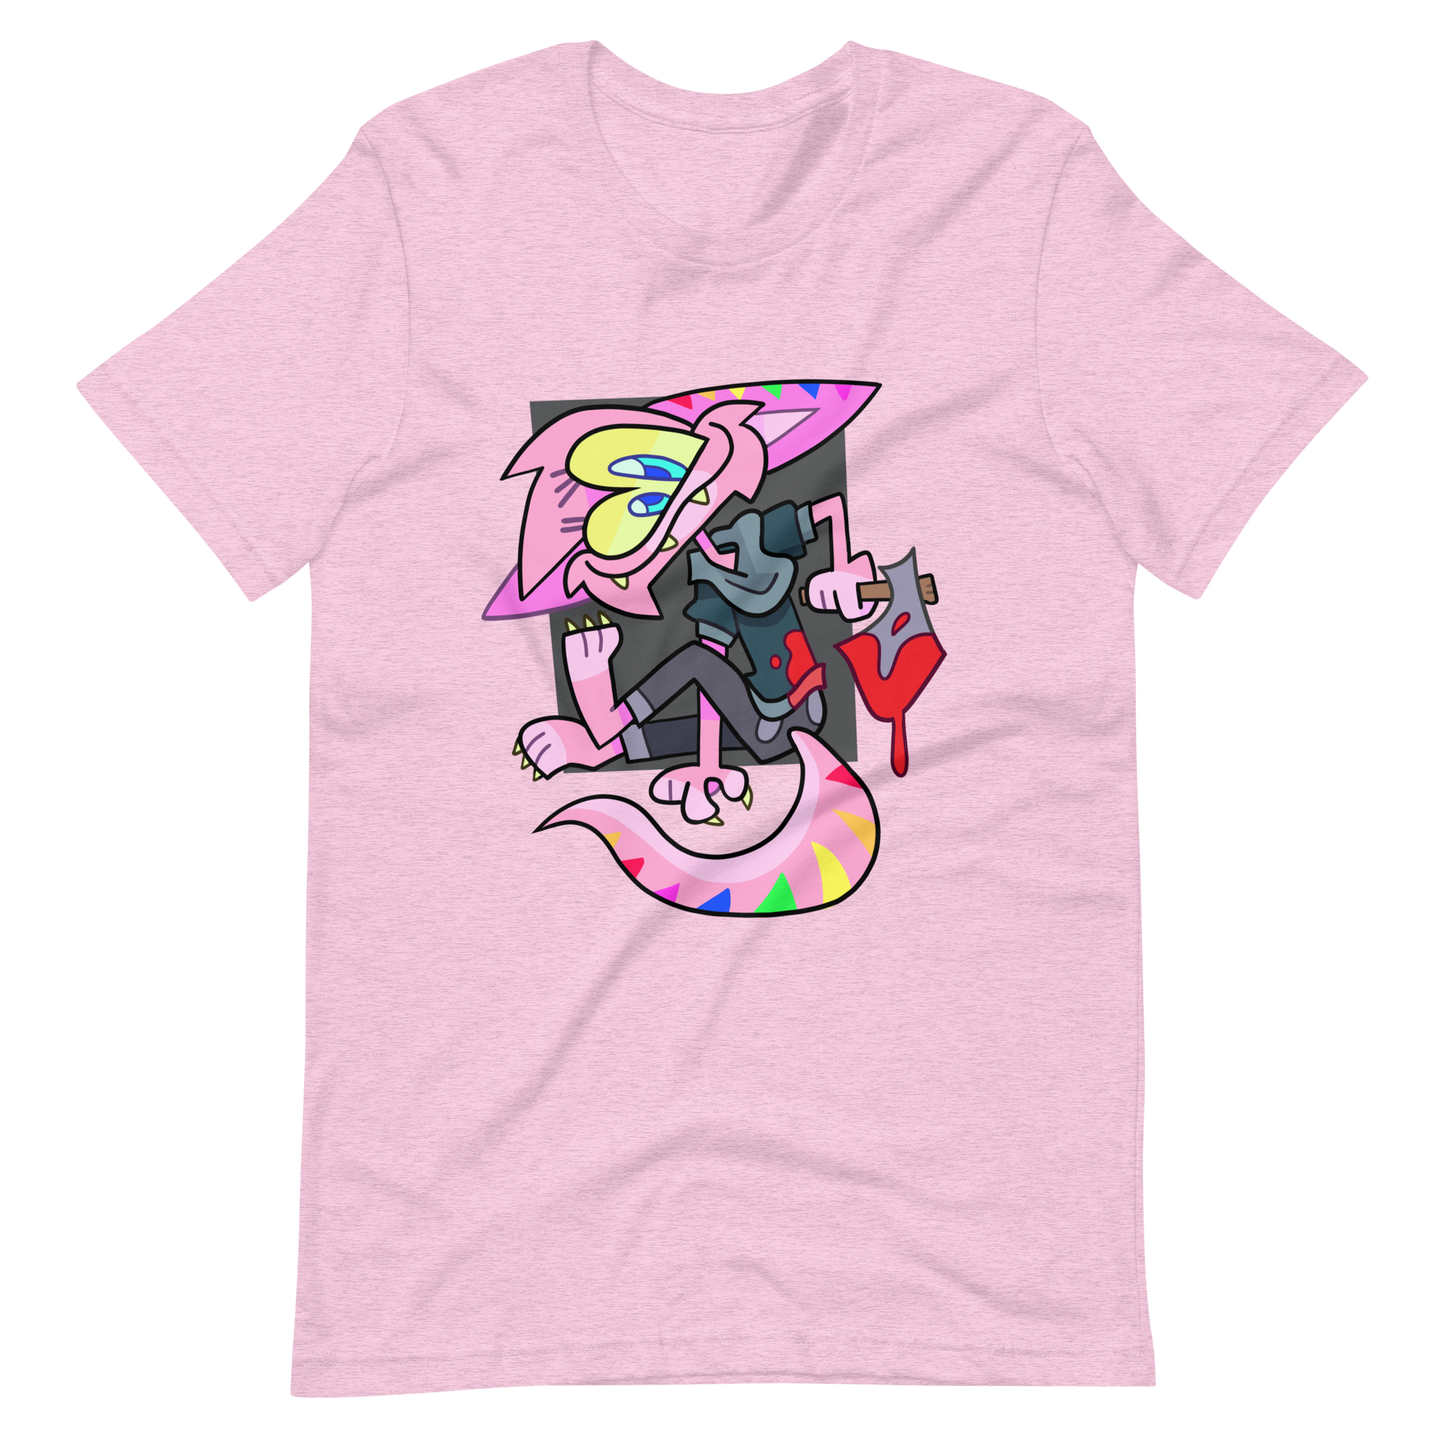 Furry fandom t shirt, by Brighton street artist CORKiE. Light pink with a weird rainbow coloured character.